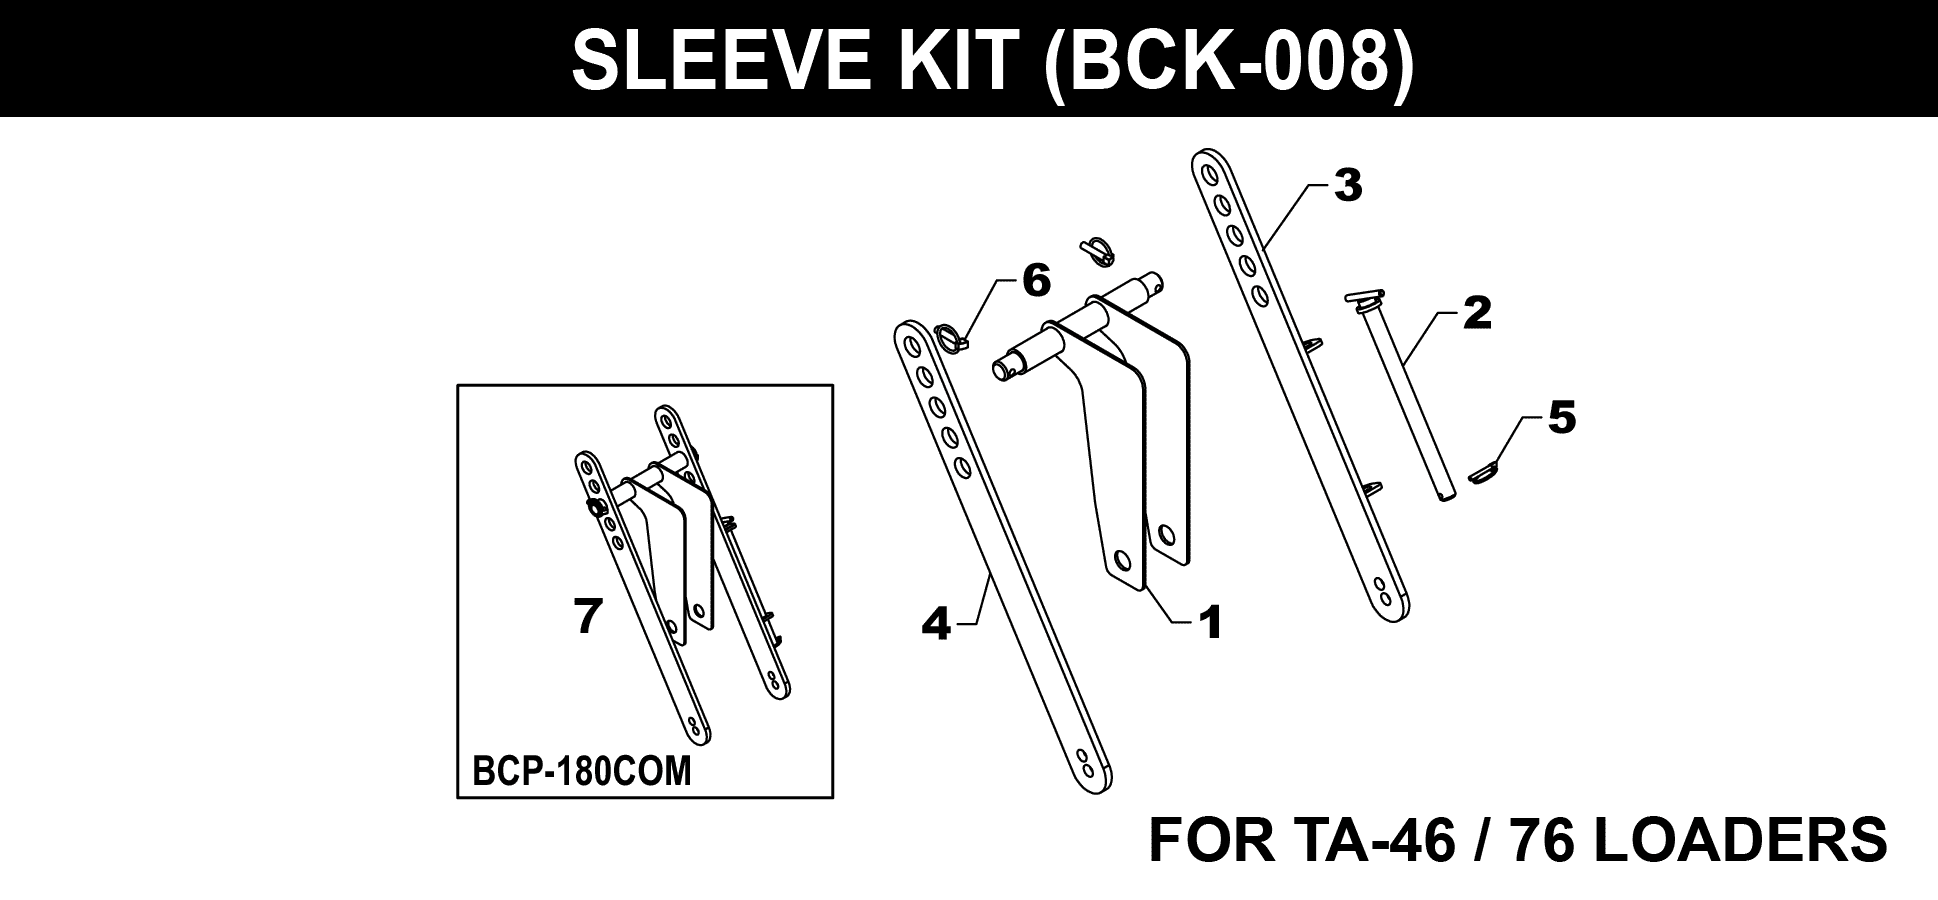 BCK-008 Sleeve Kit